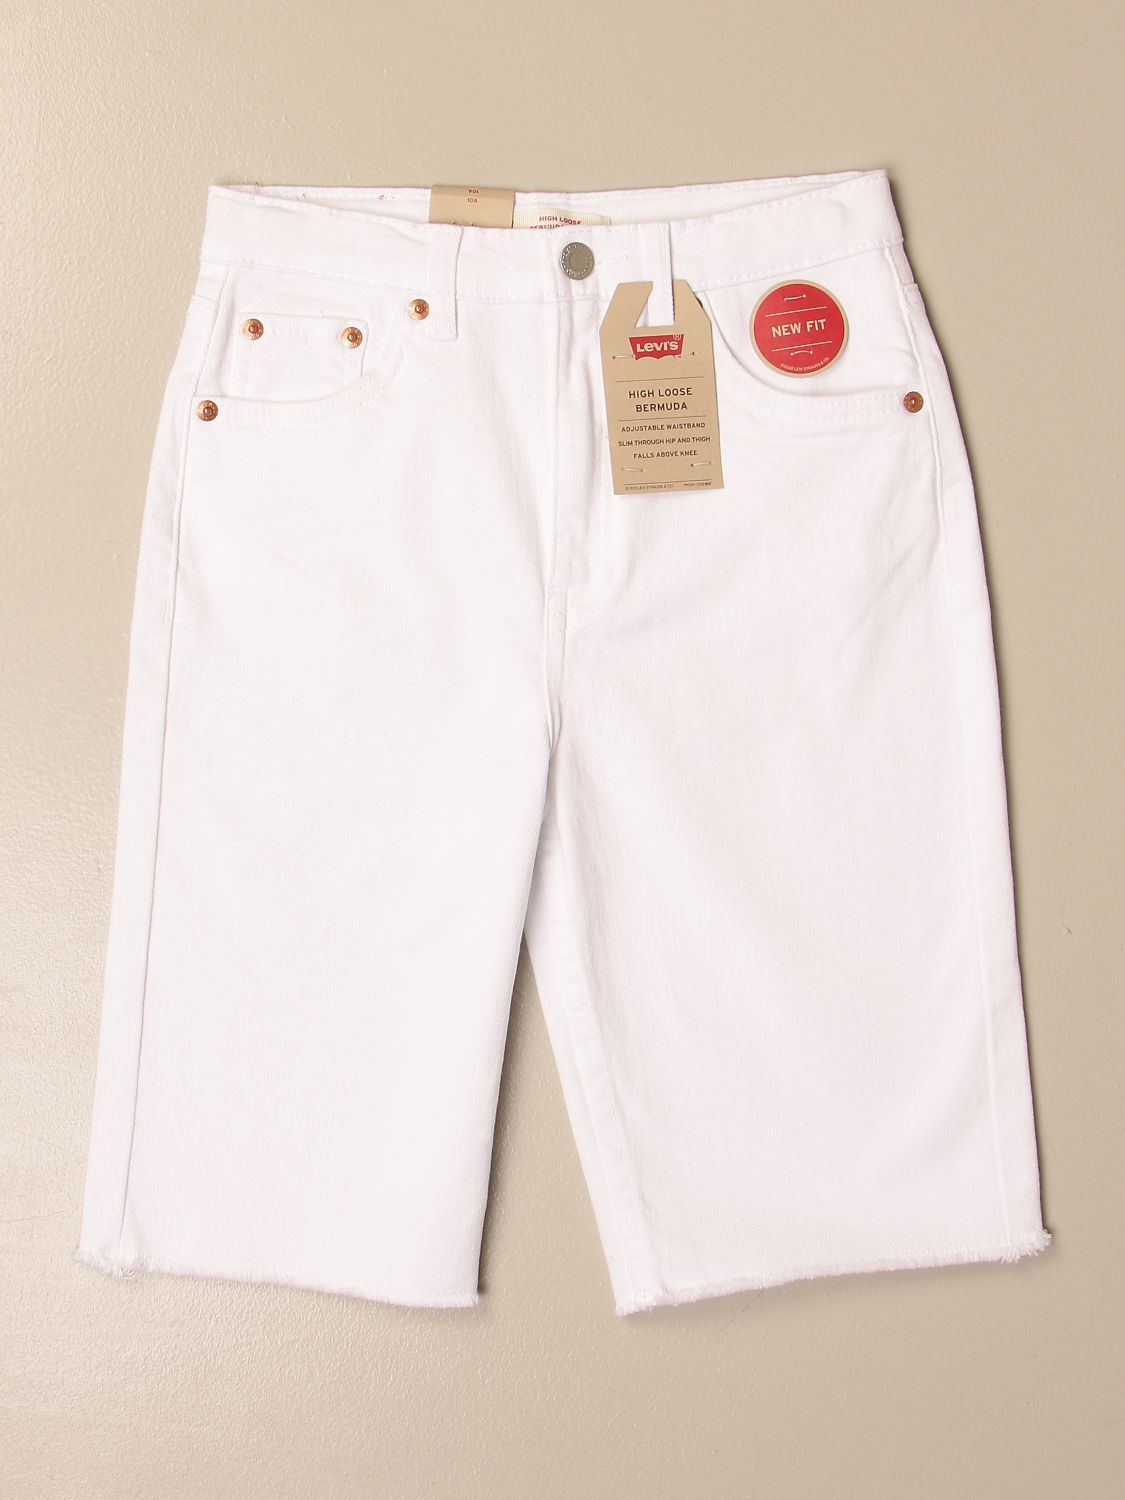 Levi's Outlet: shorts for boys - White | Levi's shorts EC917 online on  